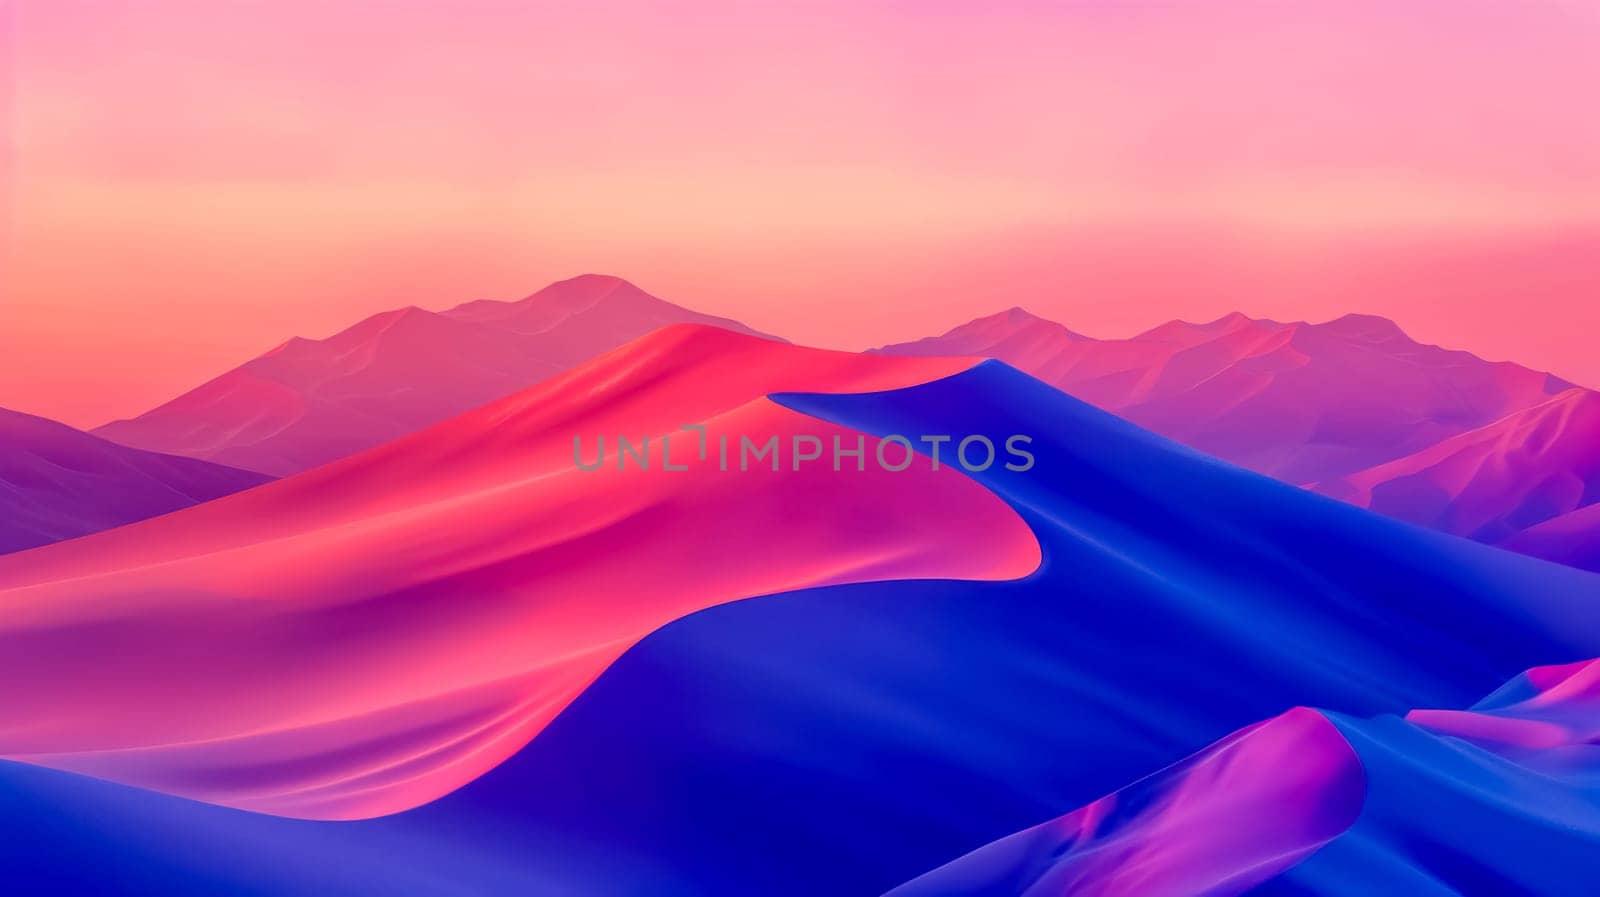 Vibrant, surreal colors blanket a tranquil desert landscape at dusk by Edophoto